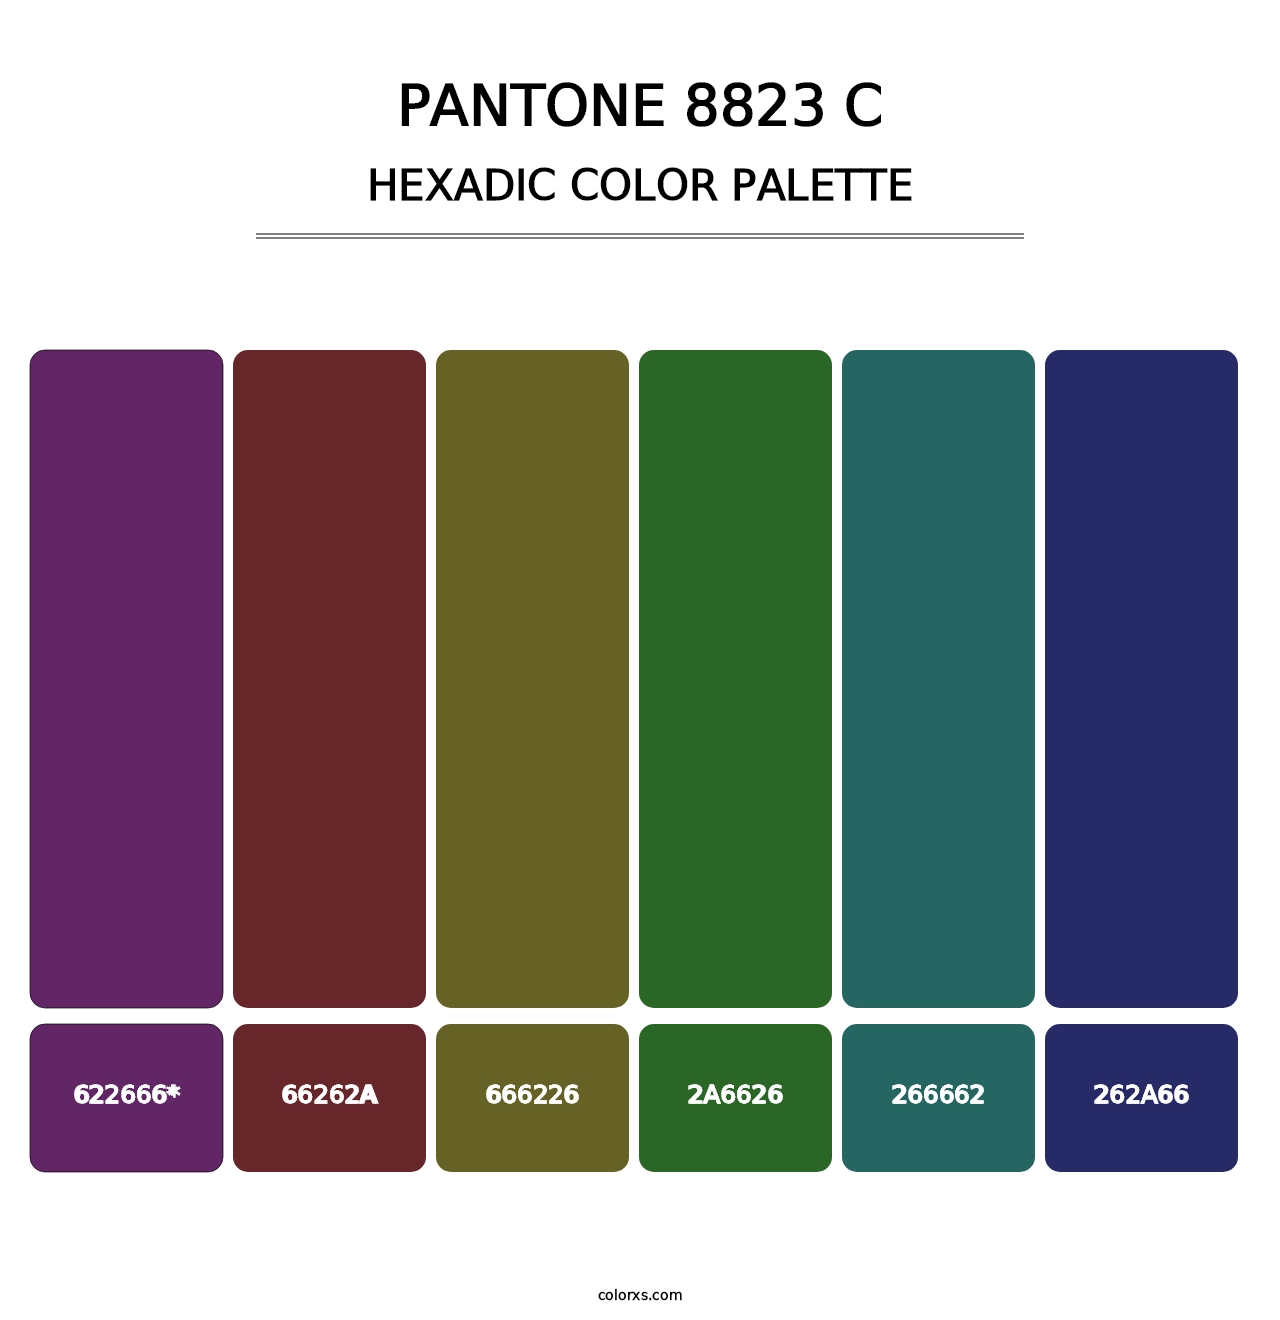 PANTONE 8823 C - Hexadic Color Palette